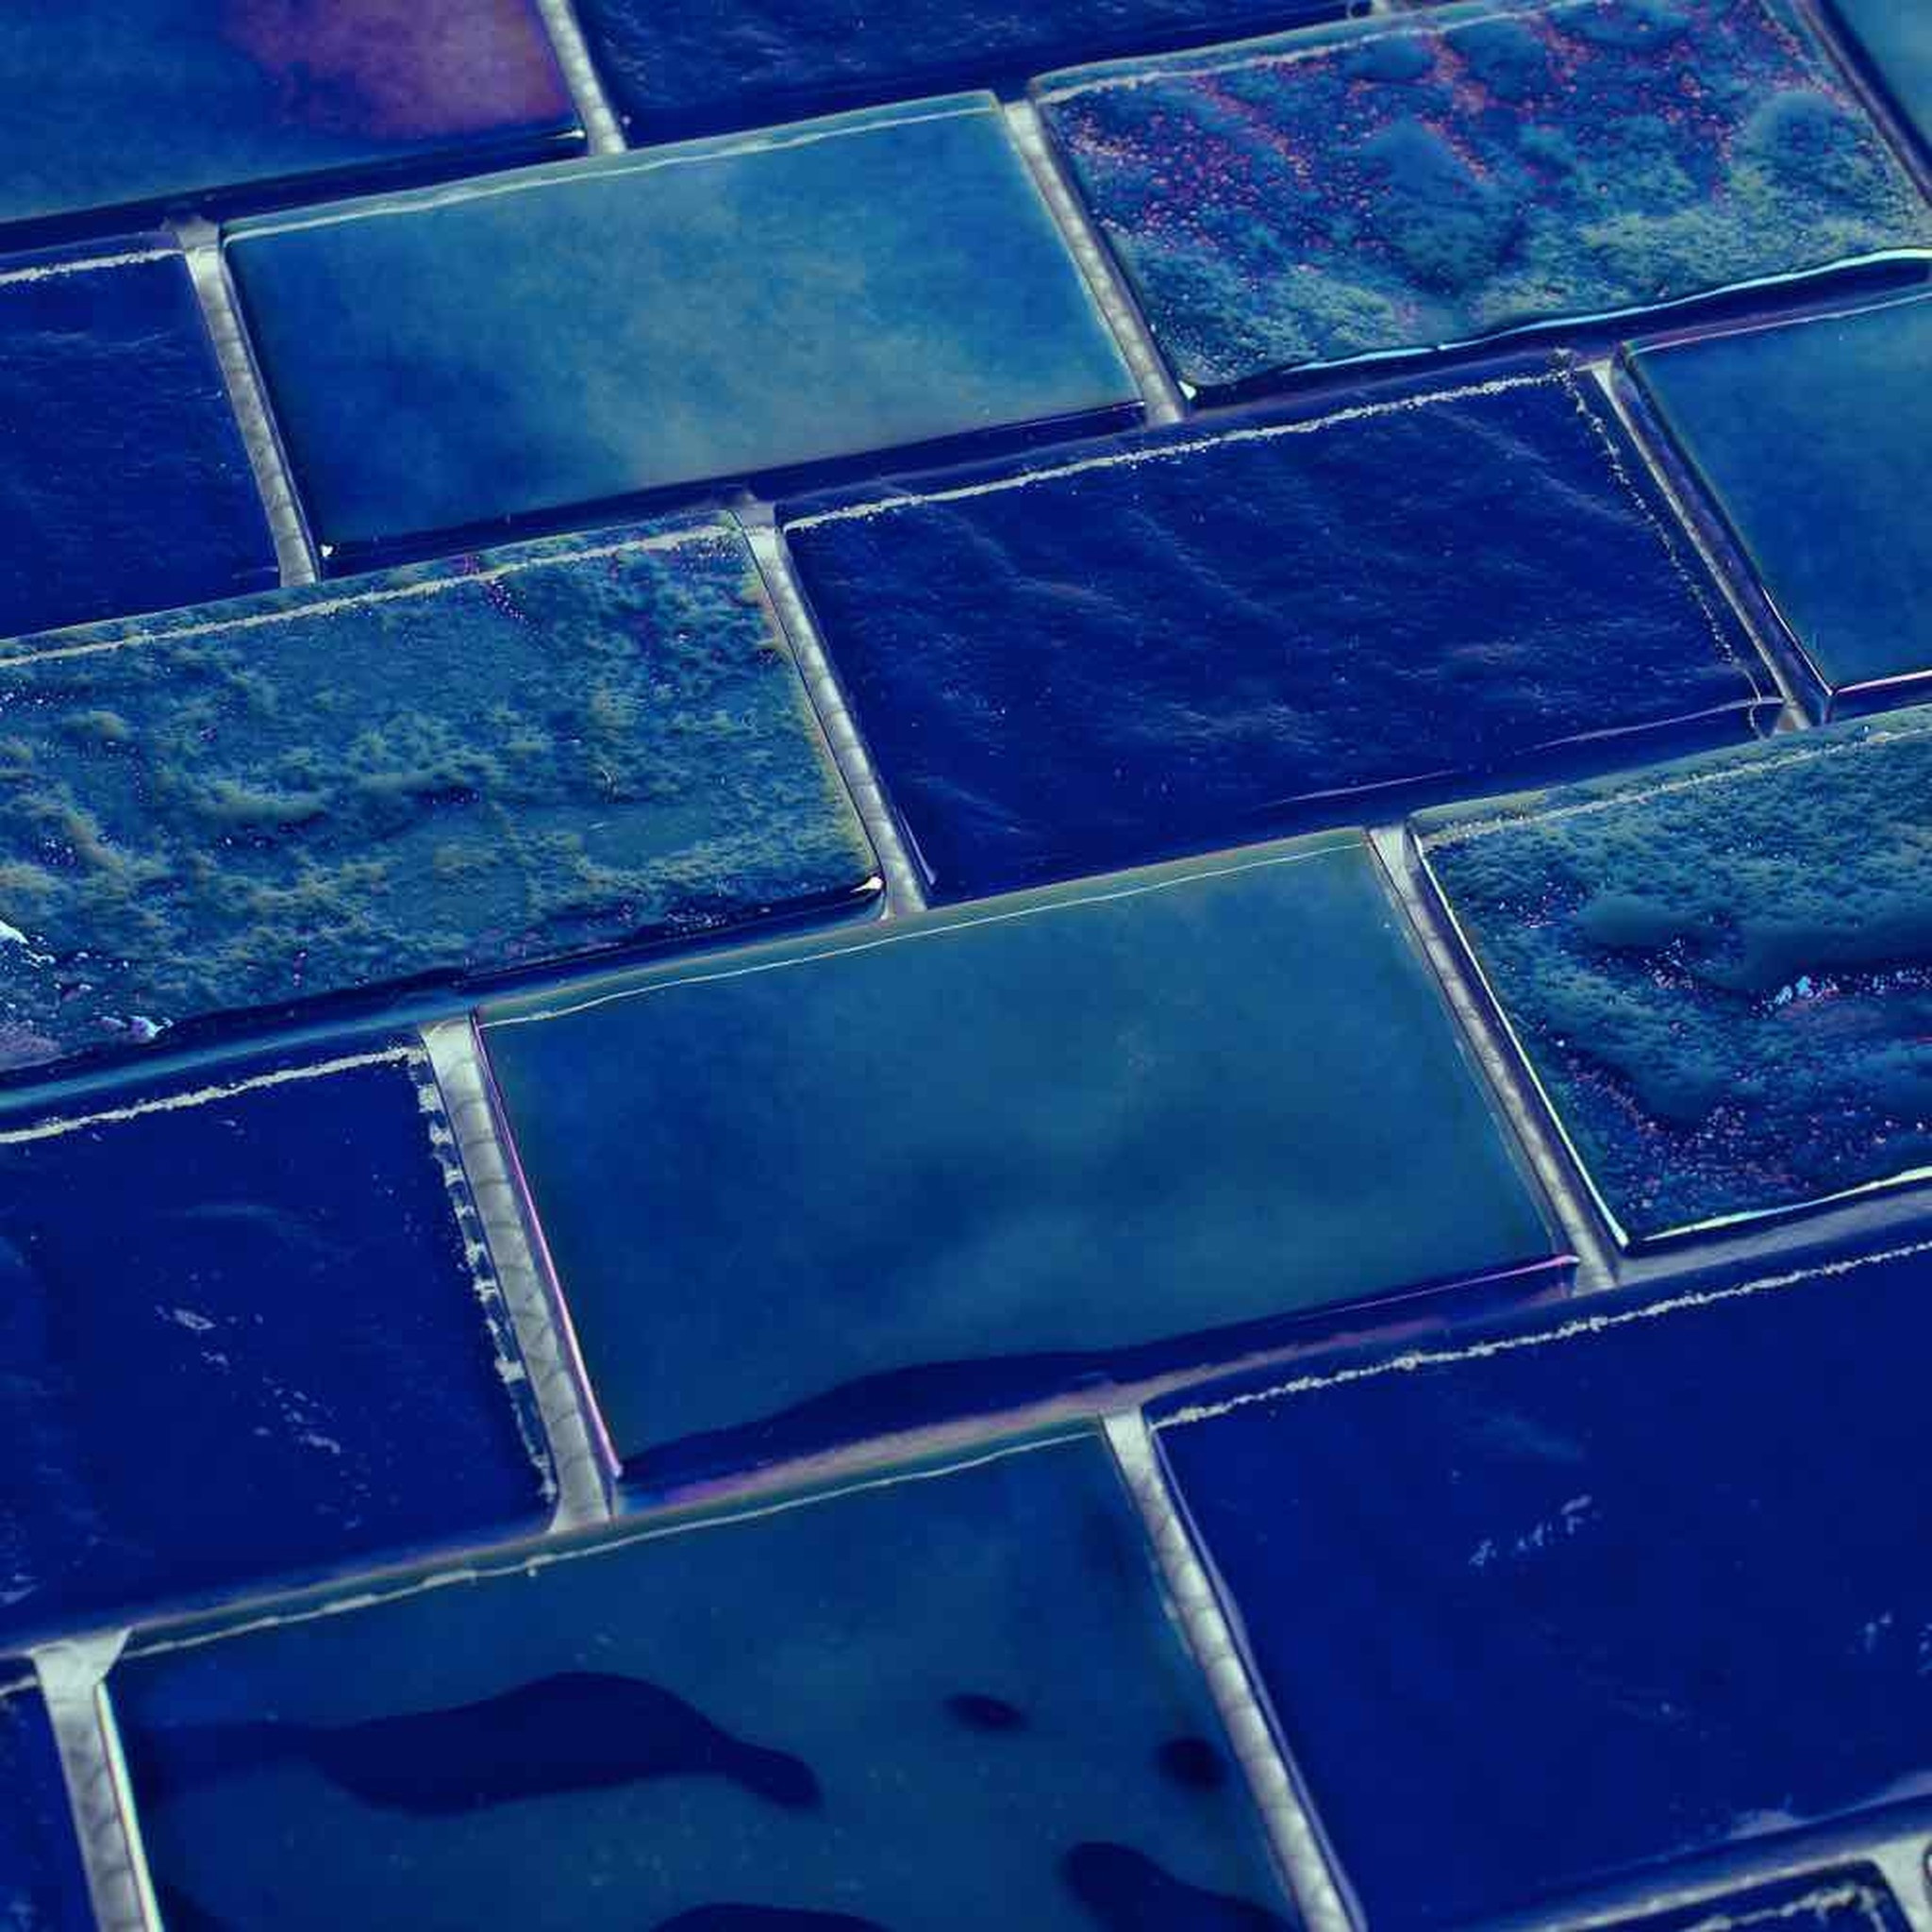 Cobalt Blue Bathroom Tile
 Summer Glass Tile Iridescent Cobalt Blue 2x3